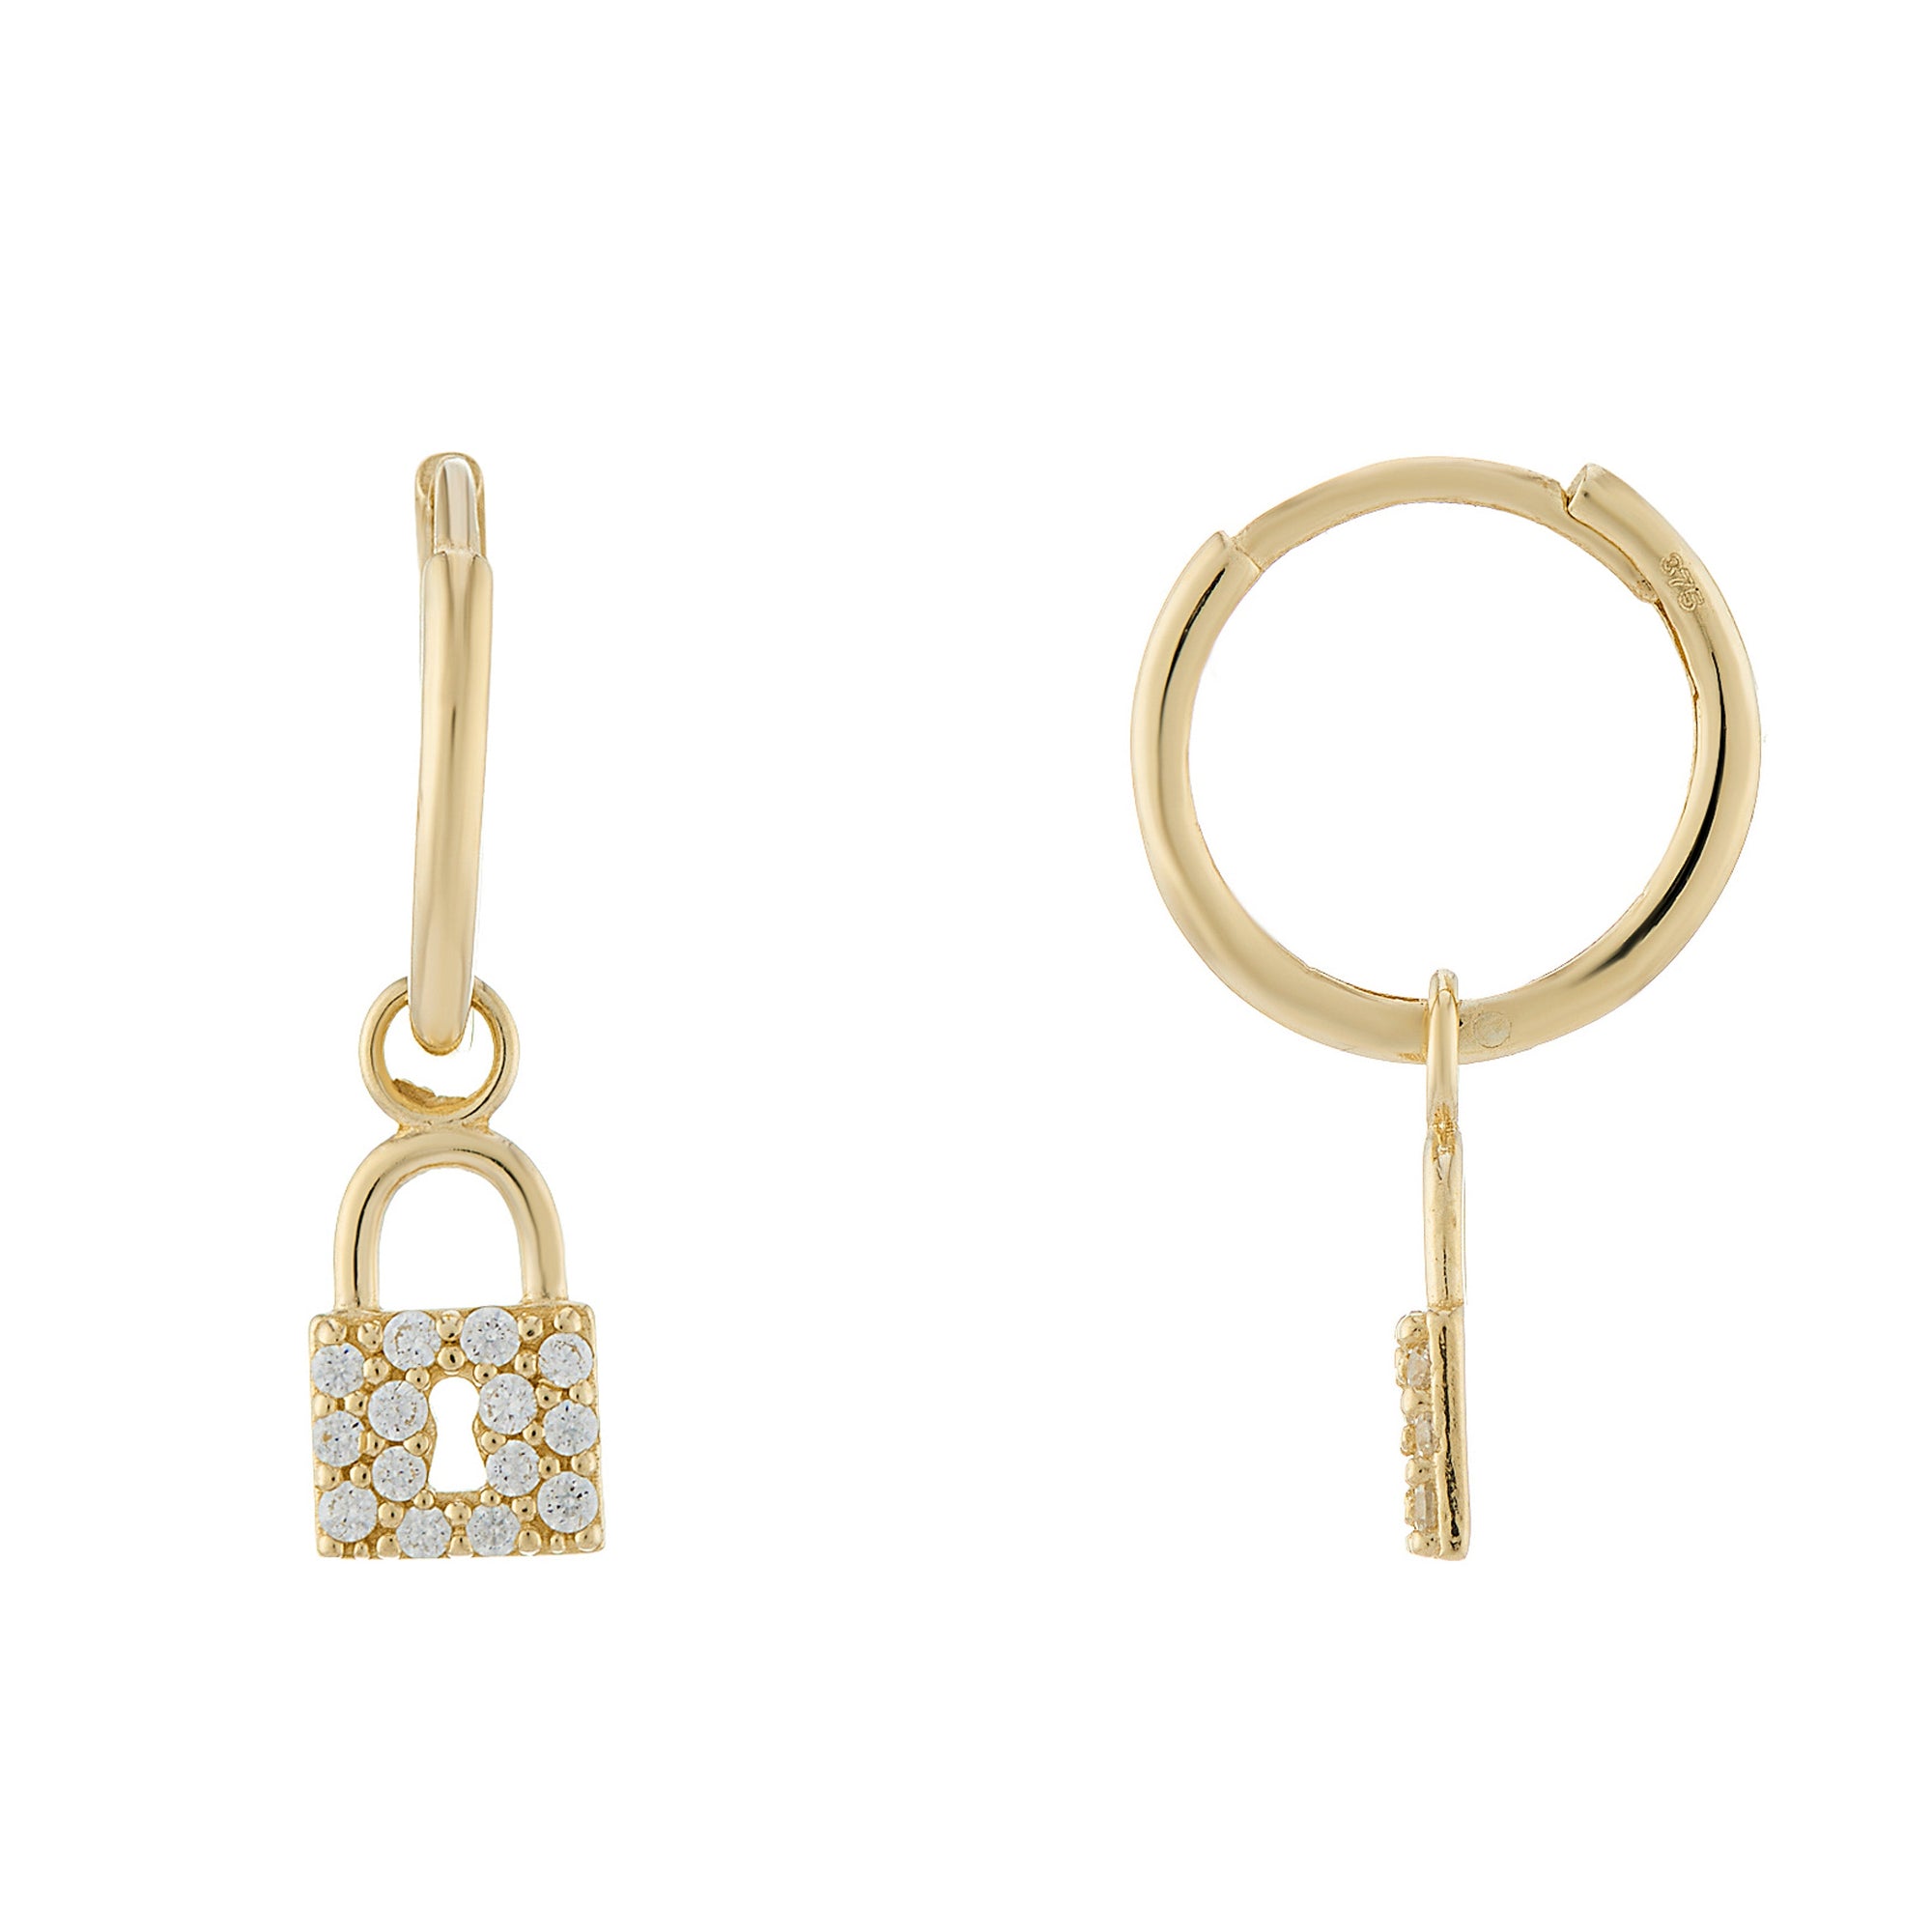 9ct gold hoop earrings with cz padlock drop